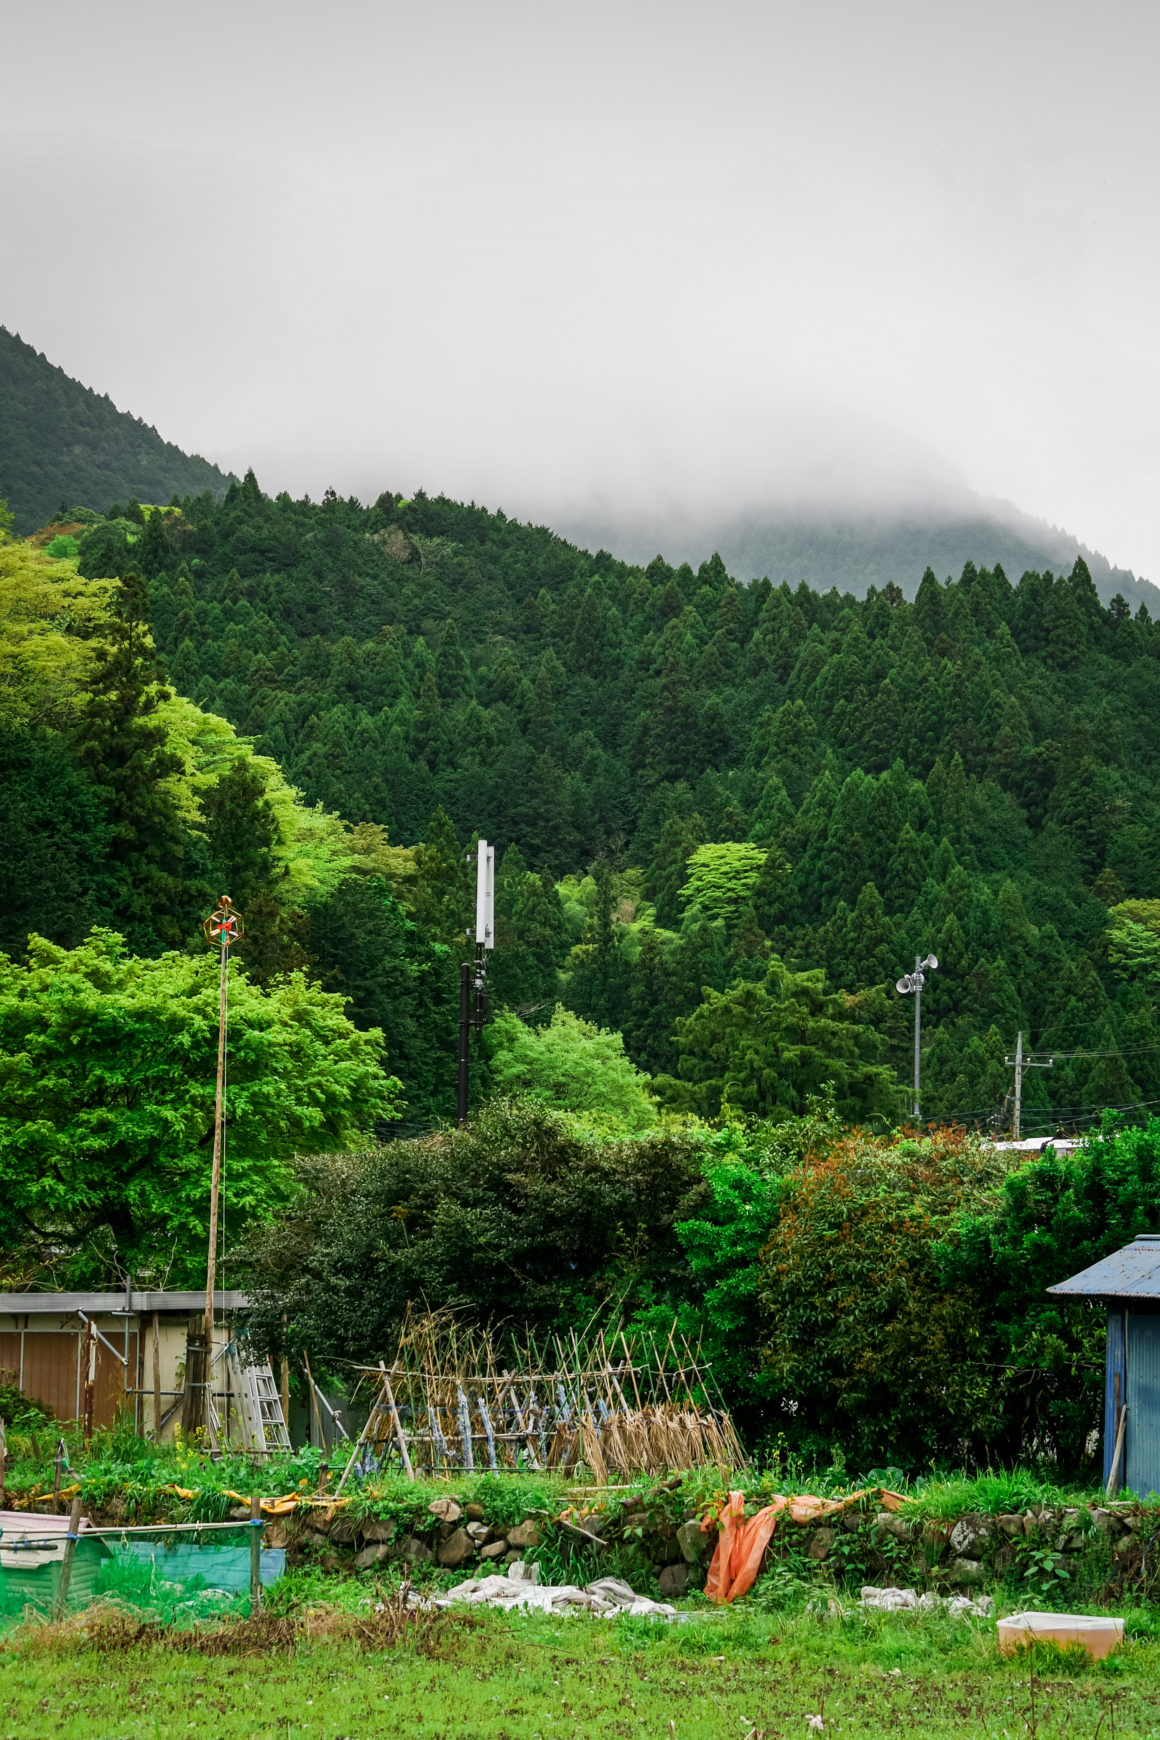 Goka farm valley, Honshu, Japan © Claire Blumenfeld